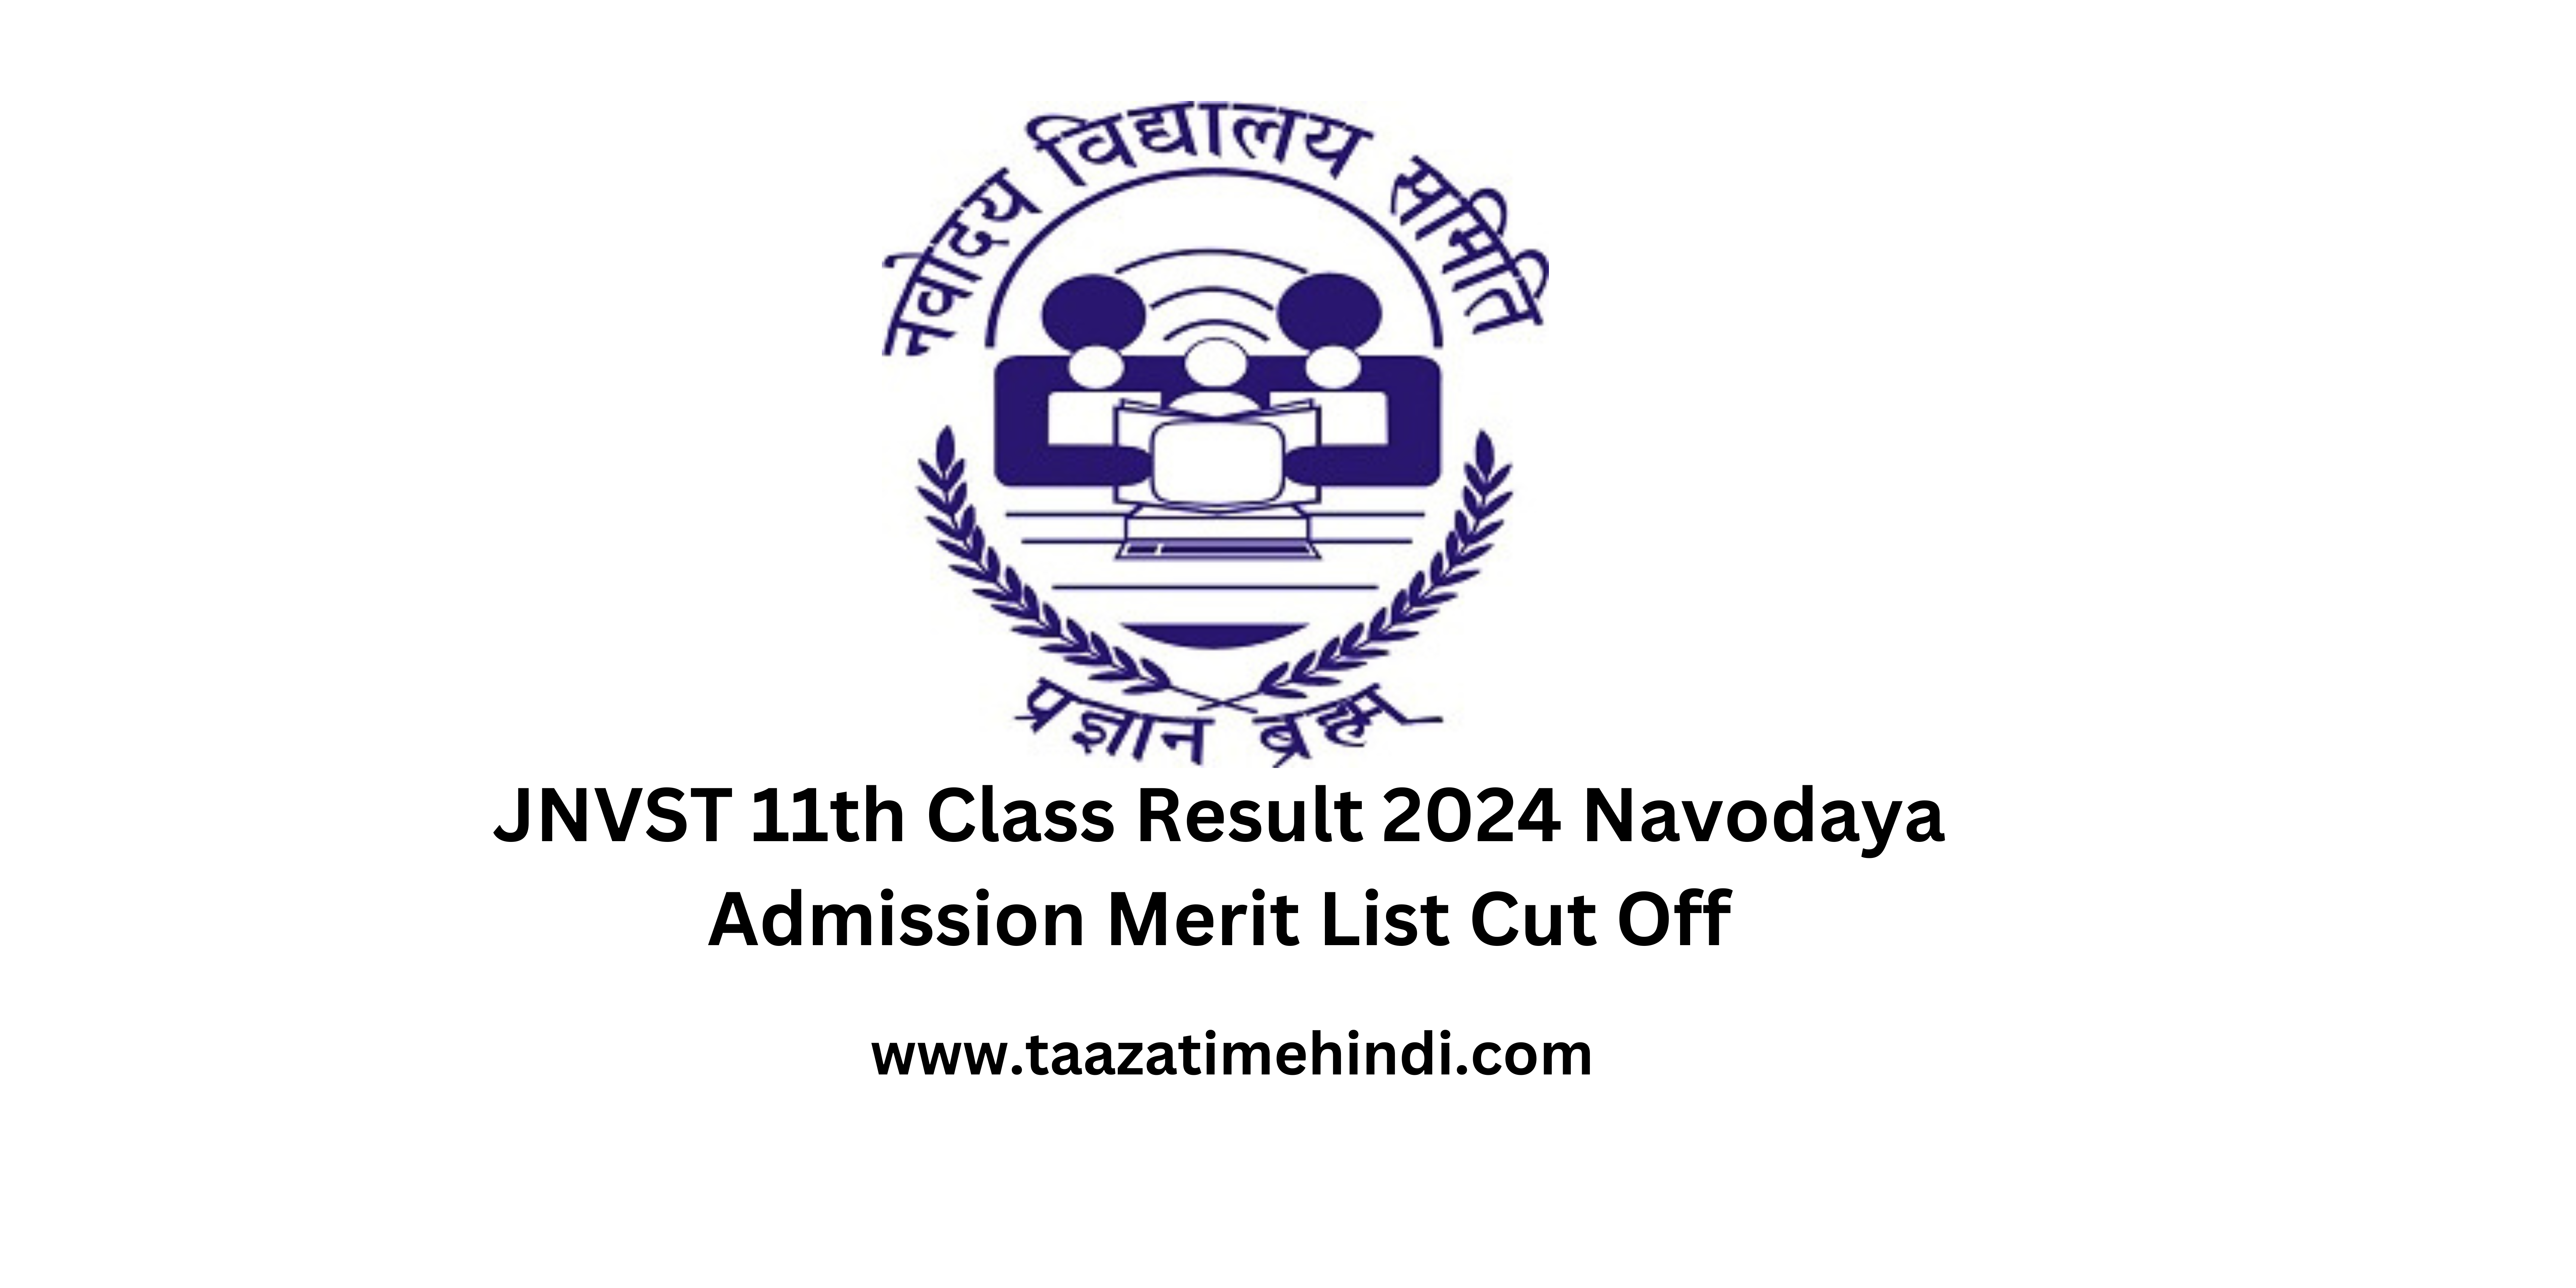 JNVST 11th Class Result 2024 Navodaya Admission Merit List Cut Off